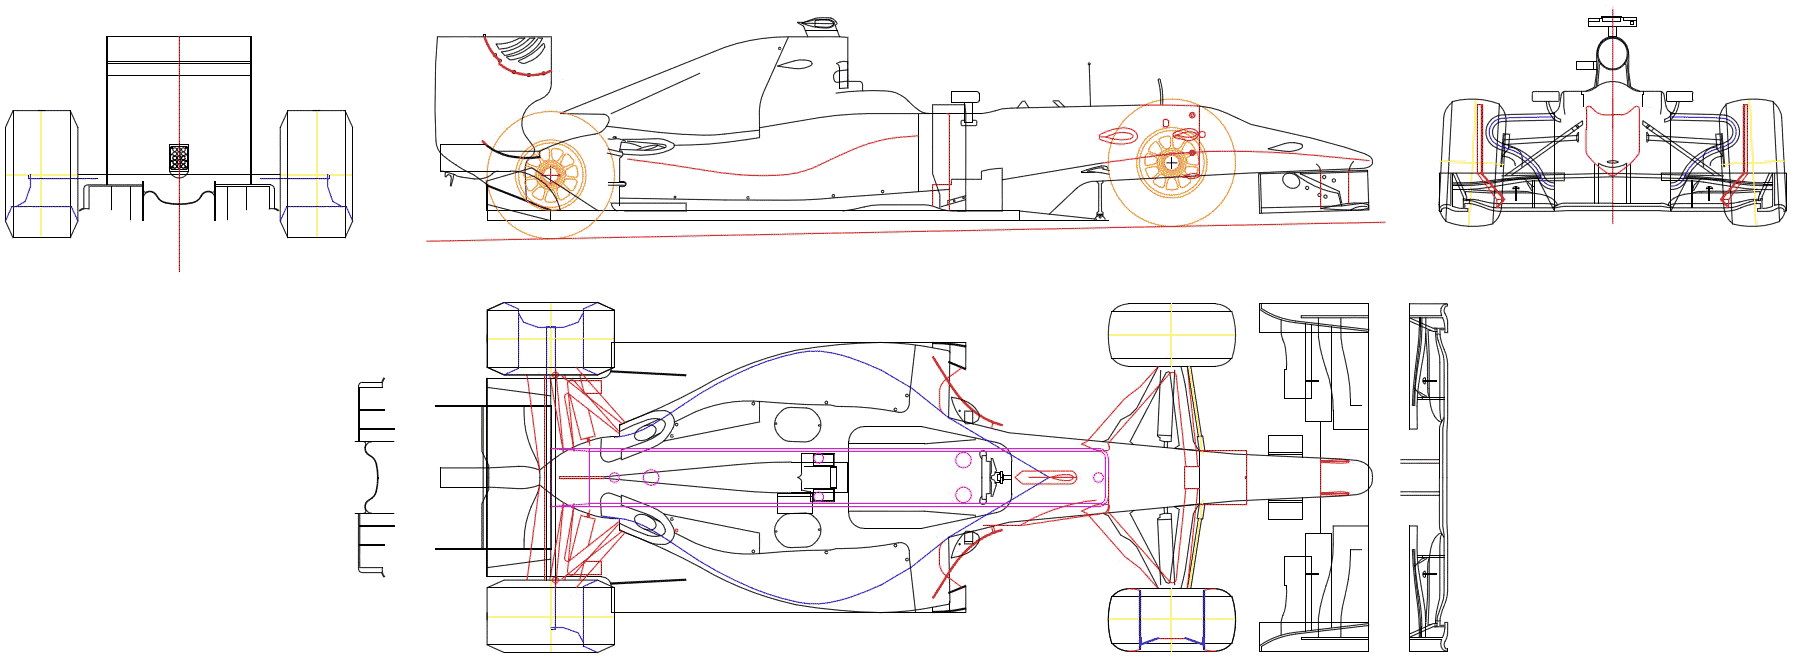 Hispania F110 blueprint